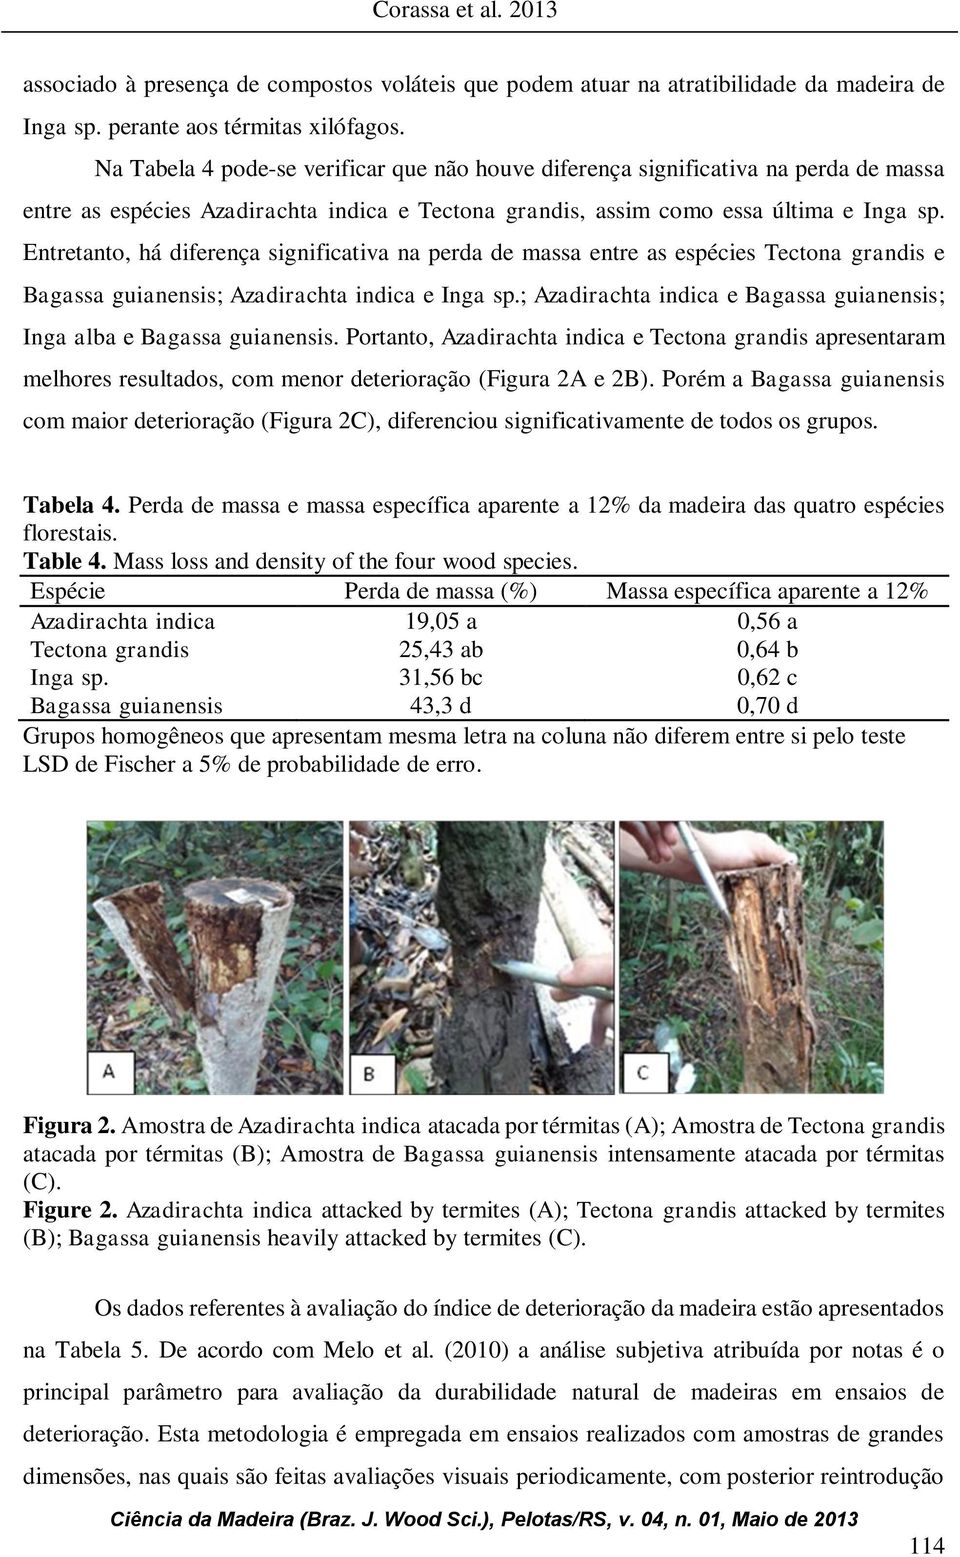 Entretanto, há diferença significativa na perda de massa entre as espécies Tectona grandis e Bagassa guianensis; Azadirachta indica e Inga sp.